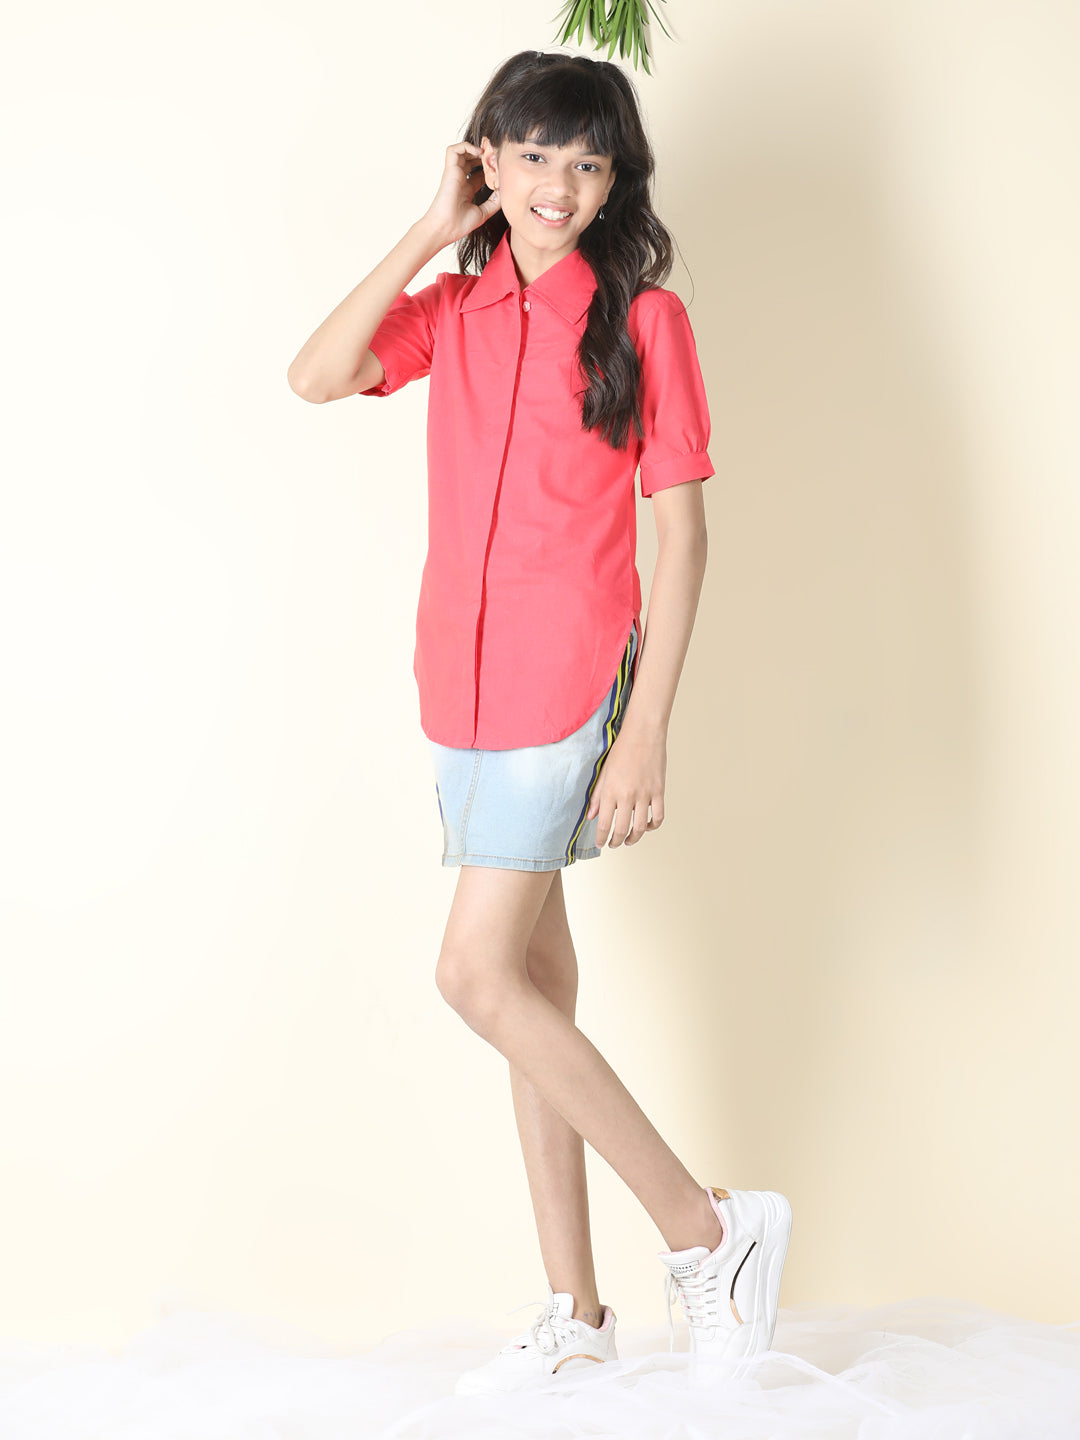 Cutiekins Girls Shirt Style Solid Top -Coral